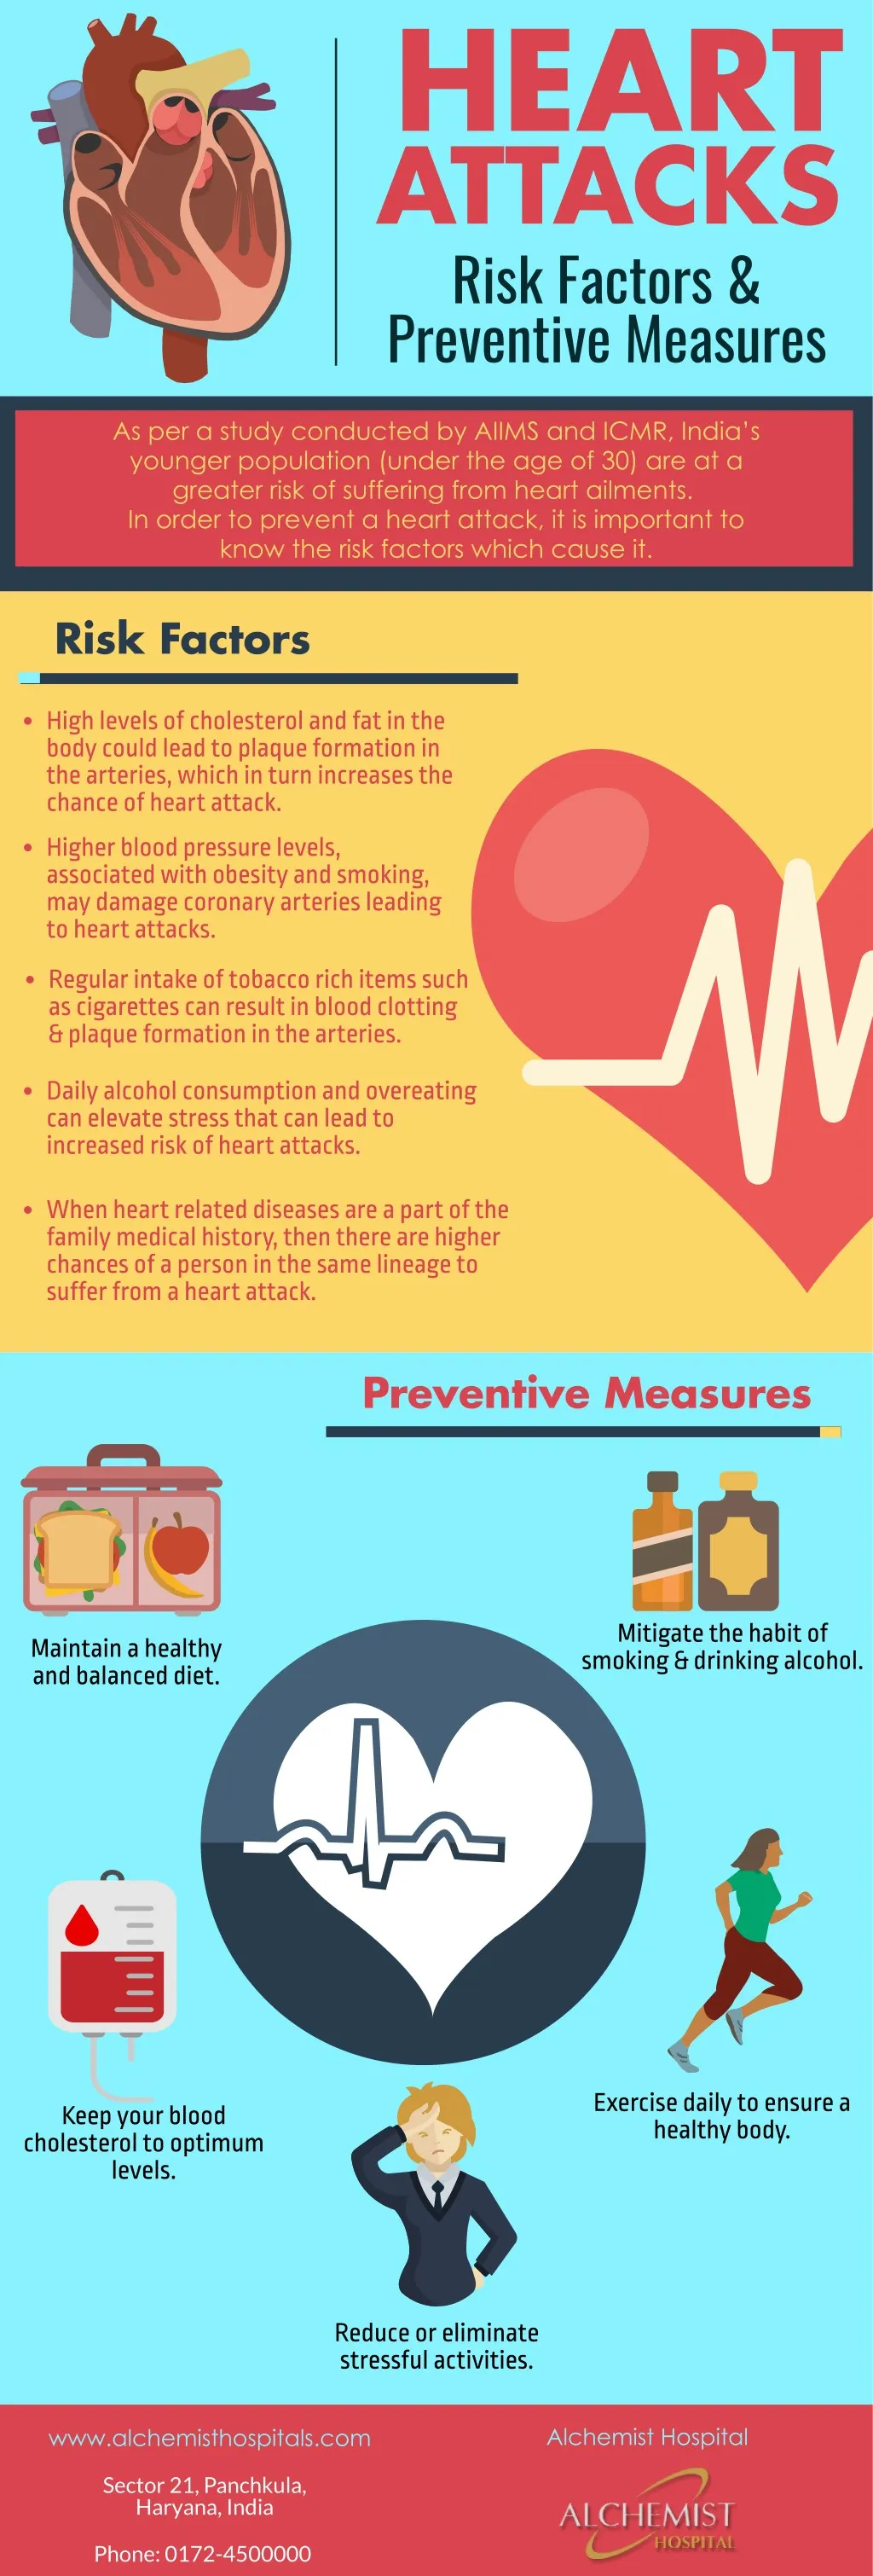 heart attacks risk factors preventive measures